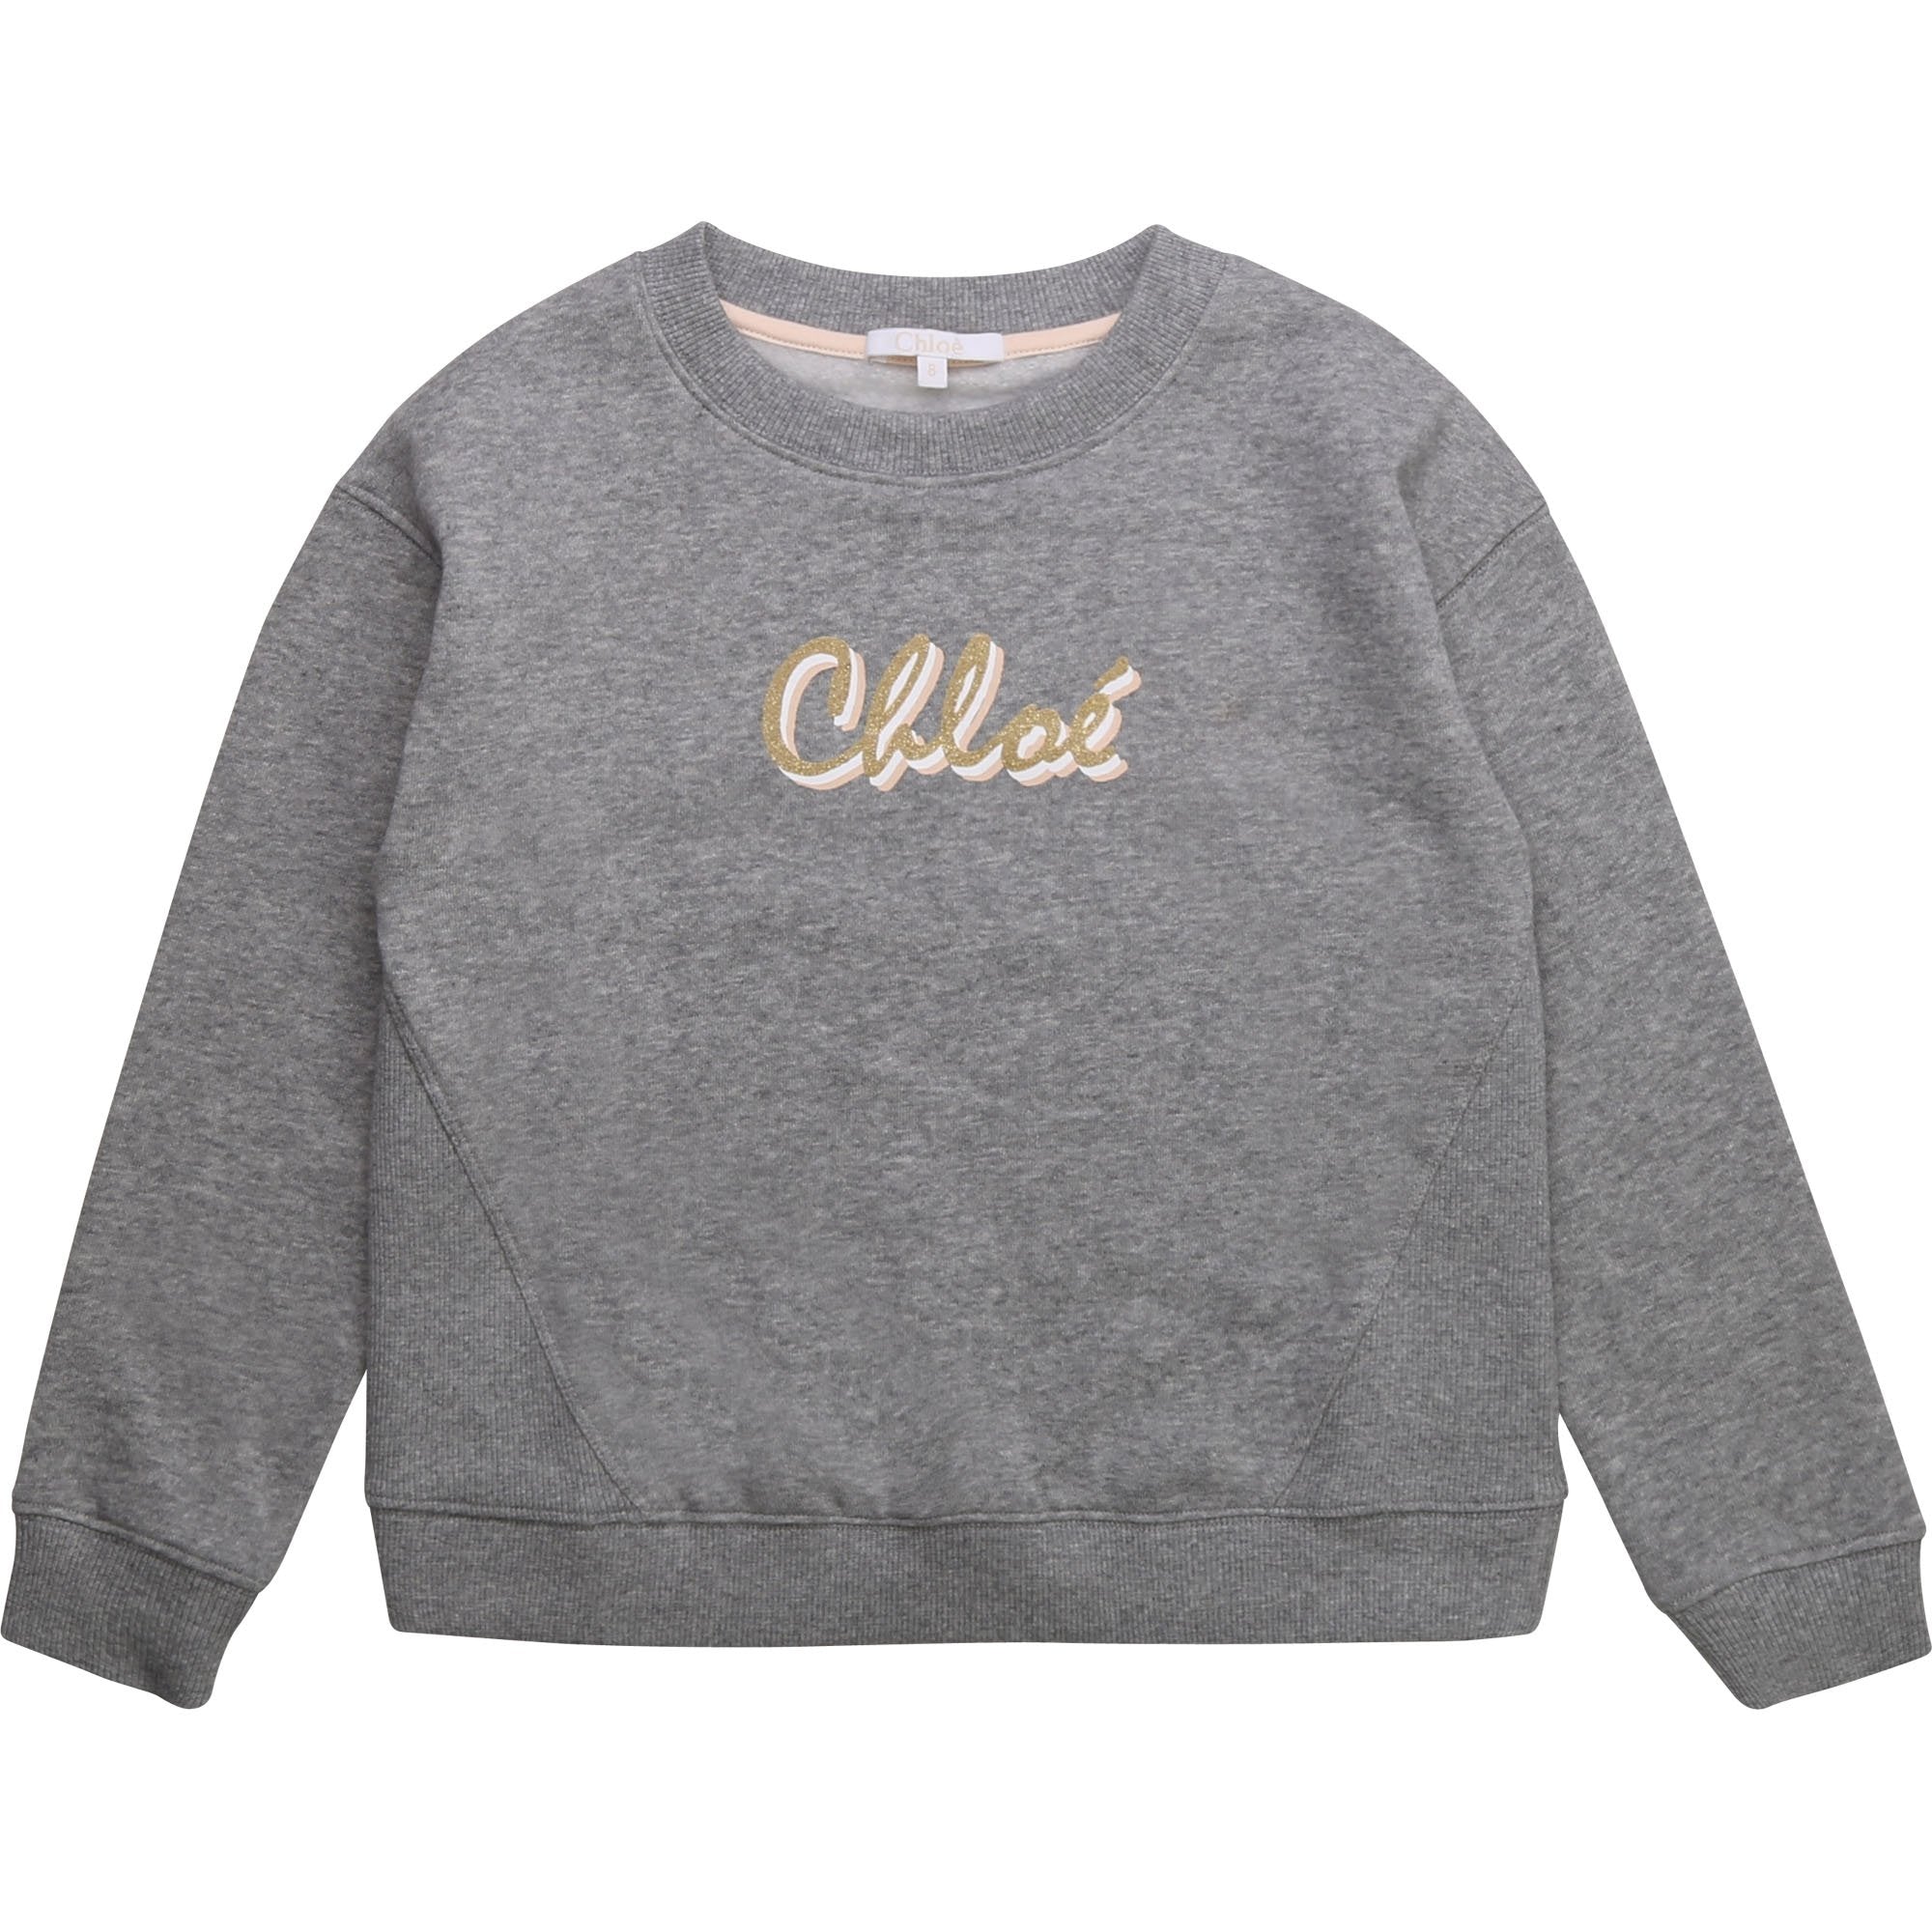 Chloe Girls Cotton Sweater Grey